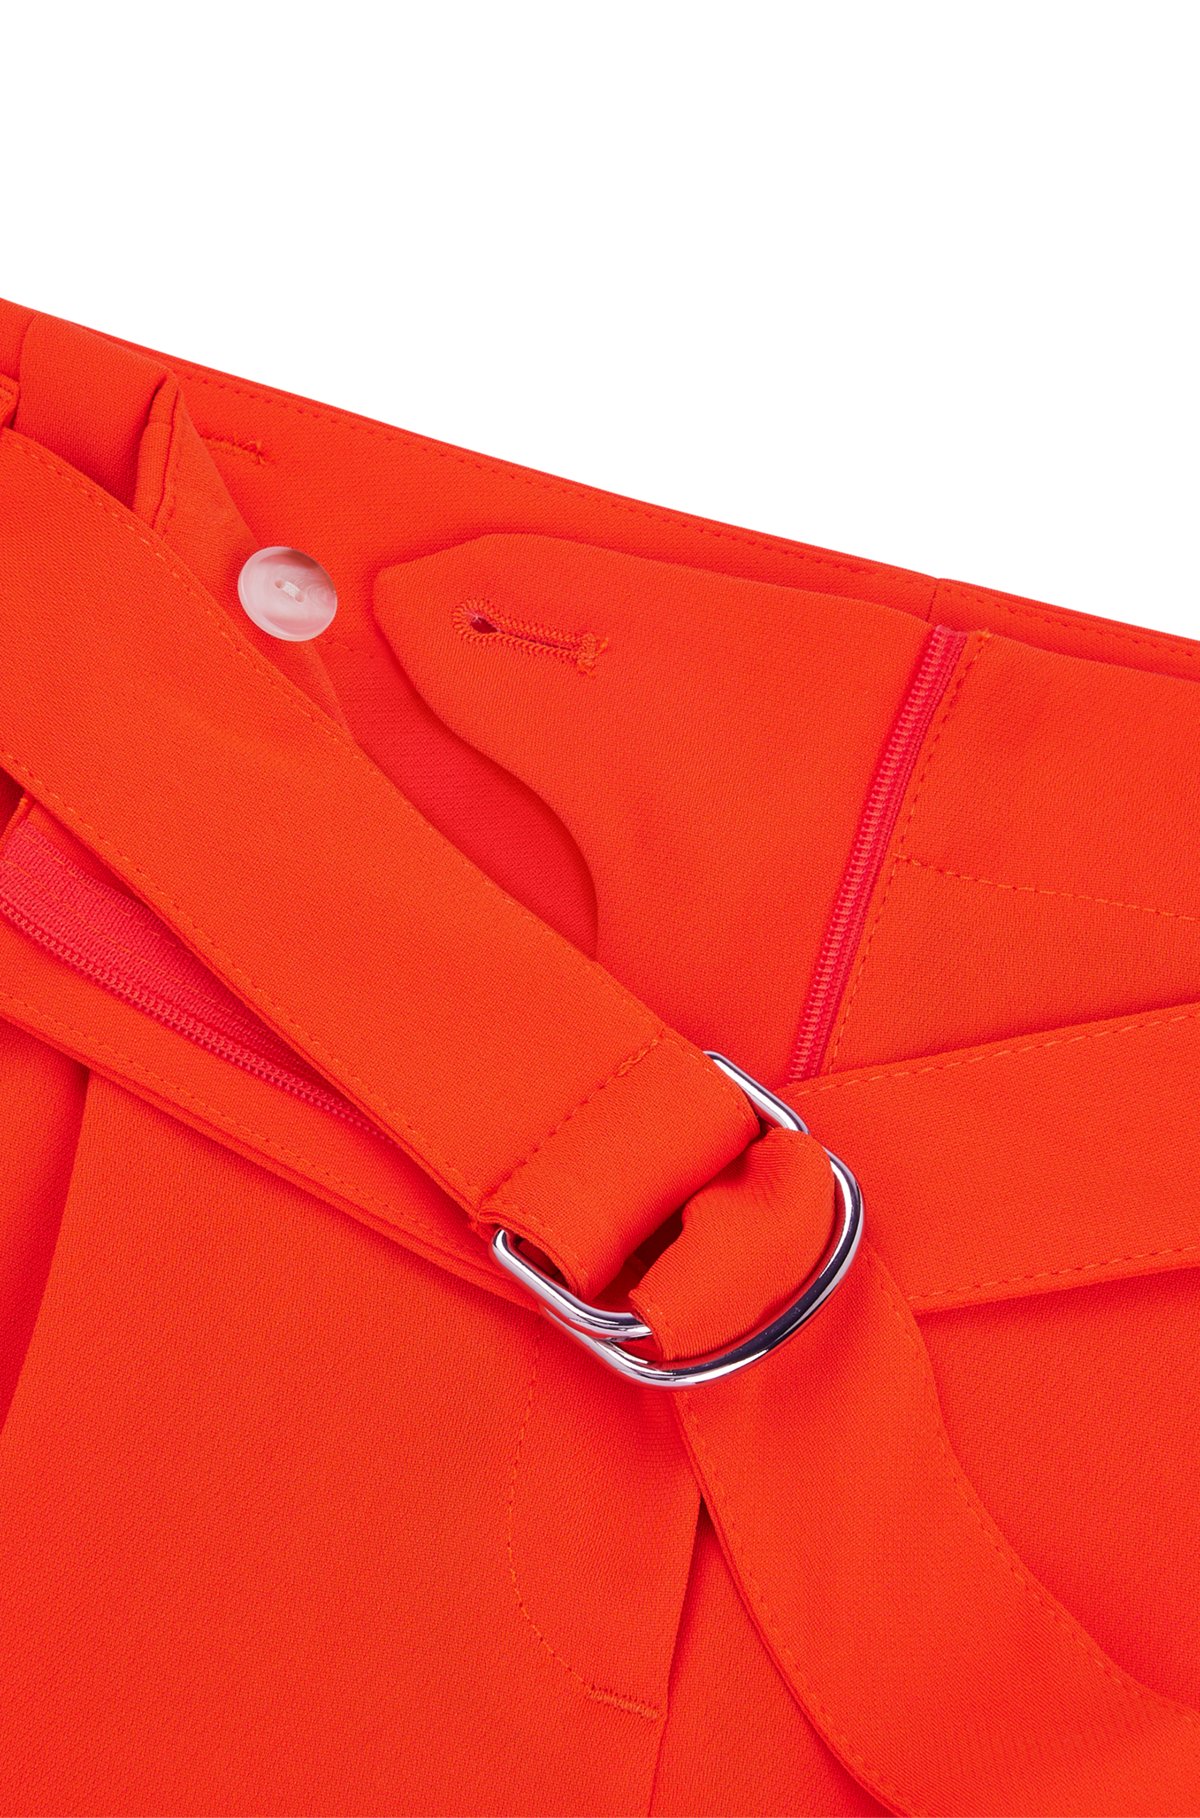 Pantalones tobilleros regular fit de crepé japonés, Naranja